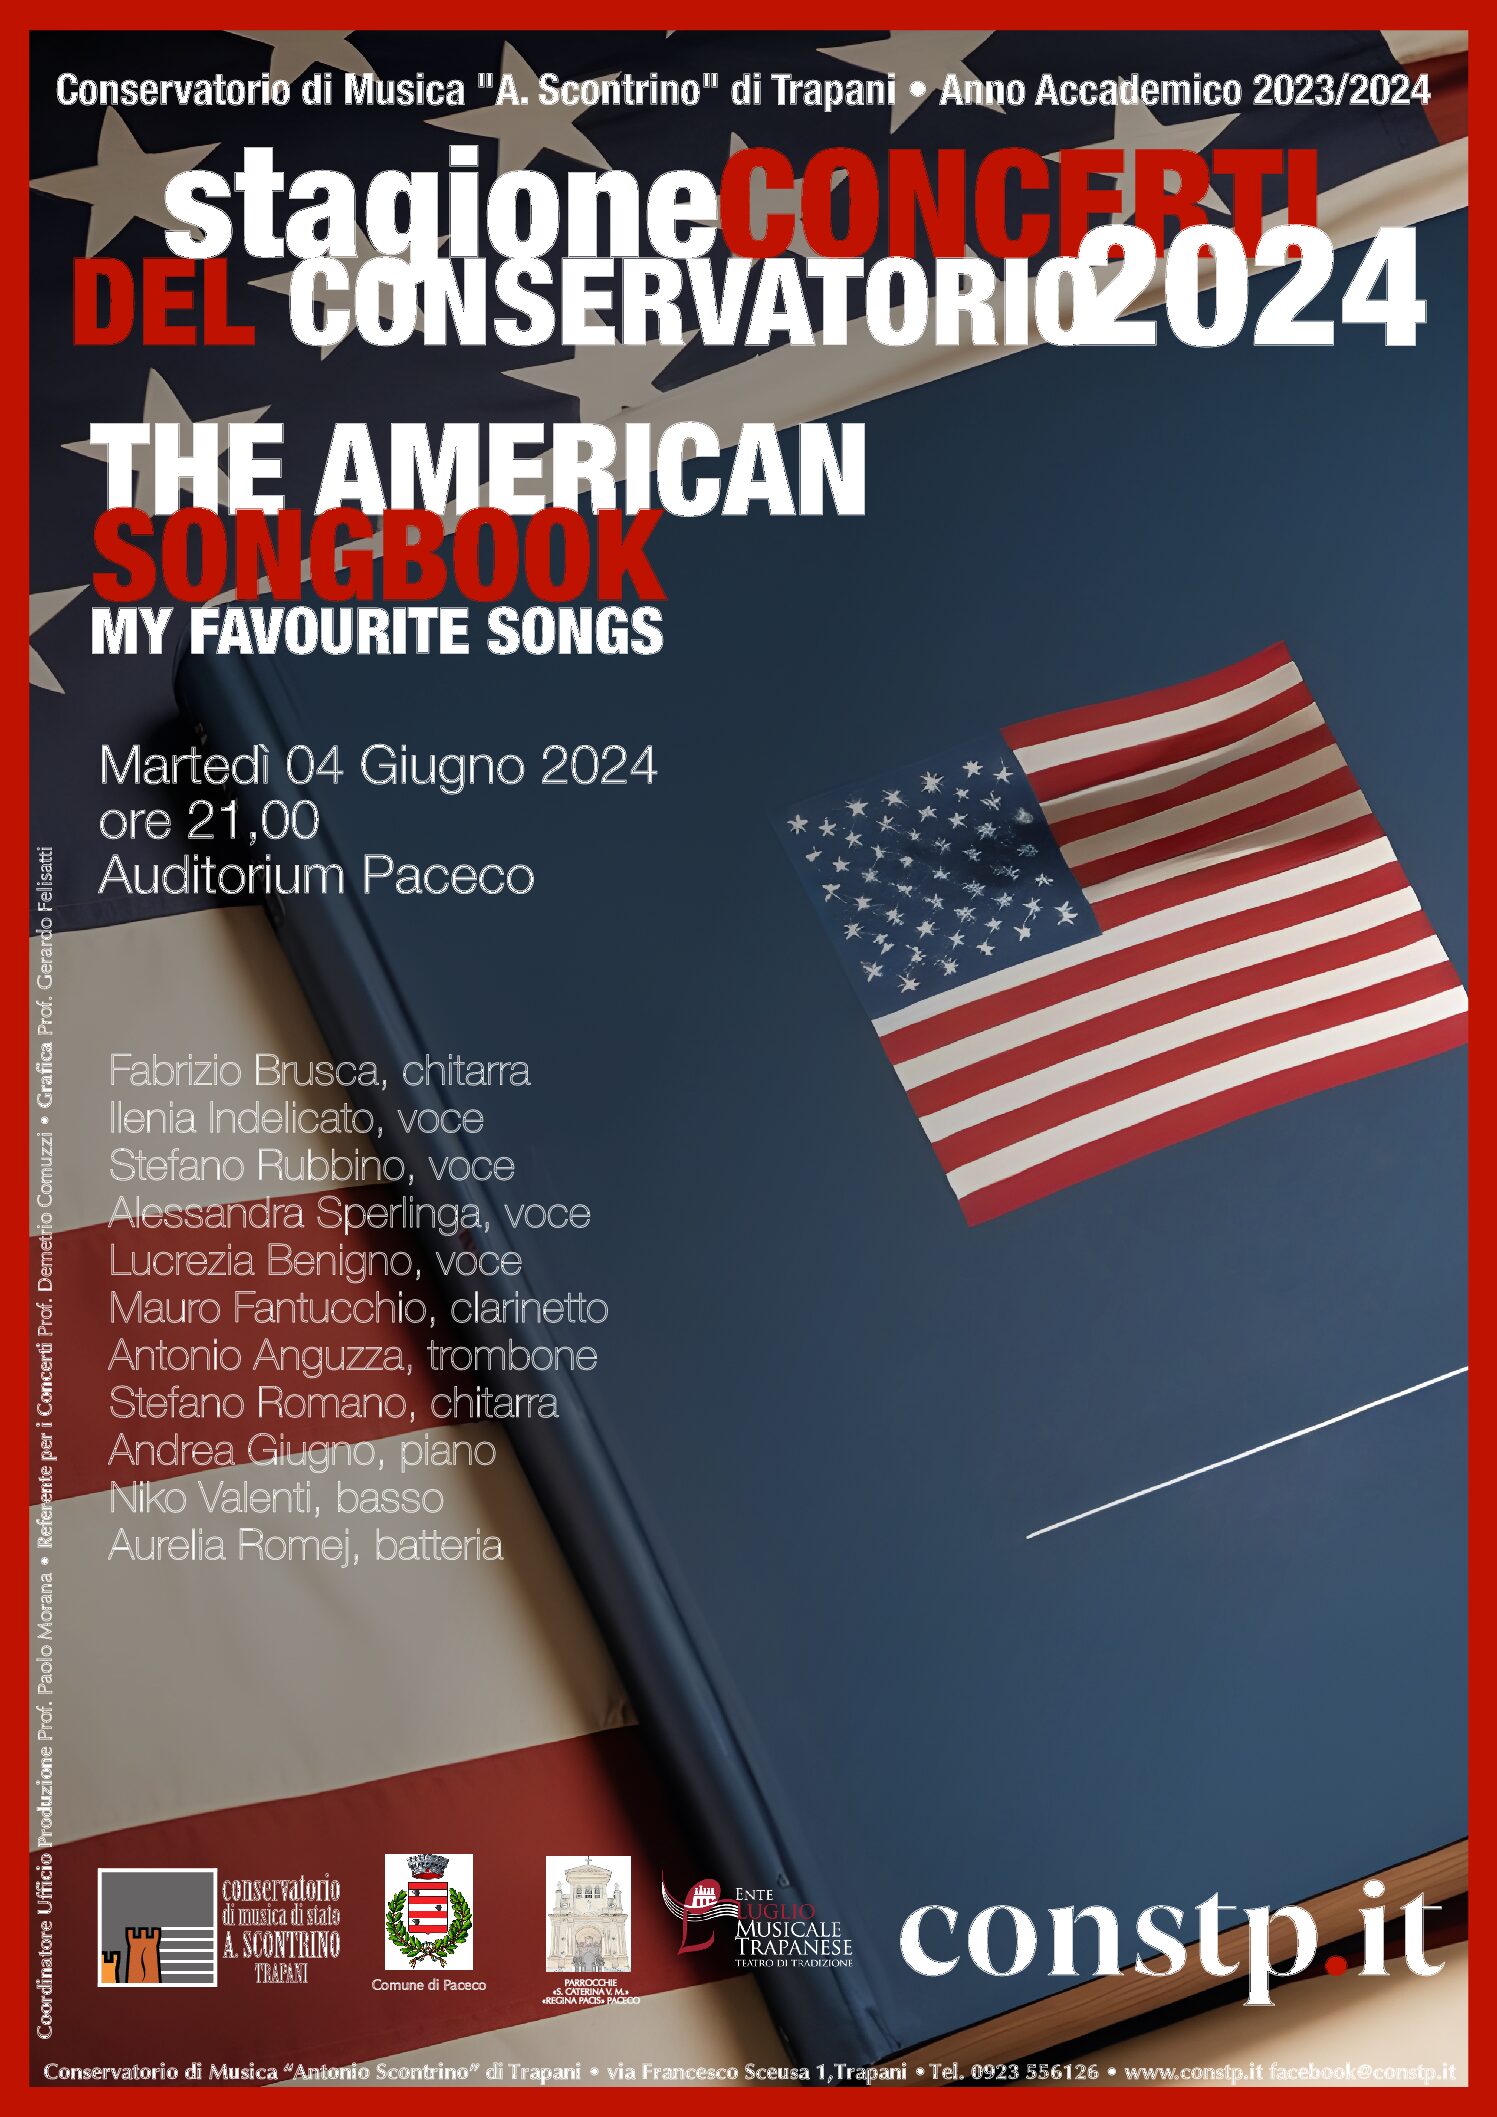 AMERICAN SONGBOOK0406 (1)